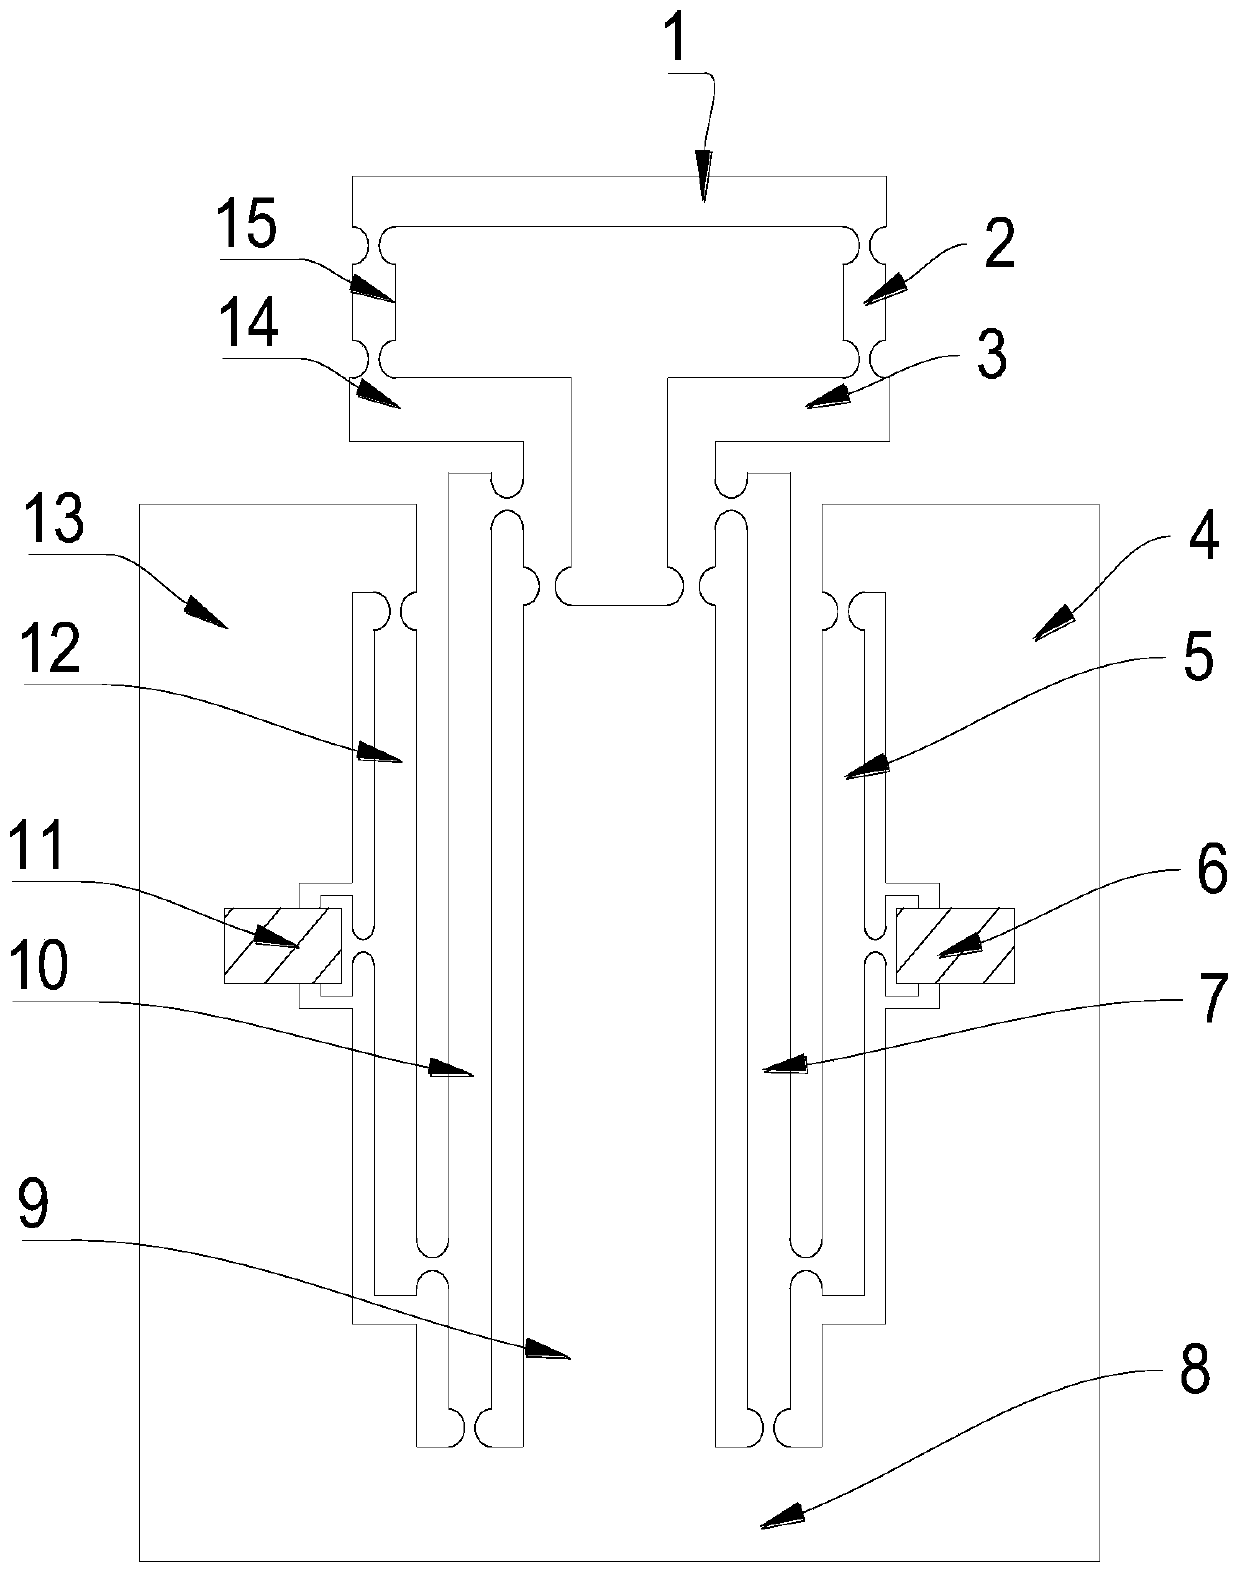 Full-flexible hinge micro-displacement amplification mechanism